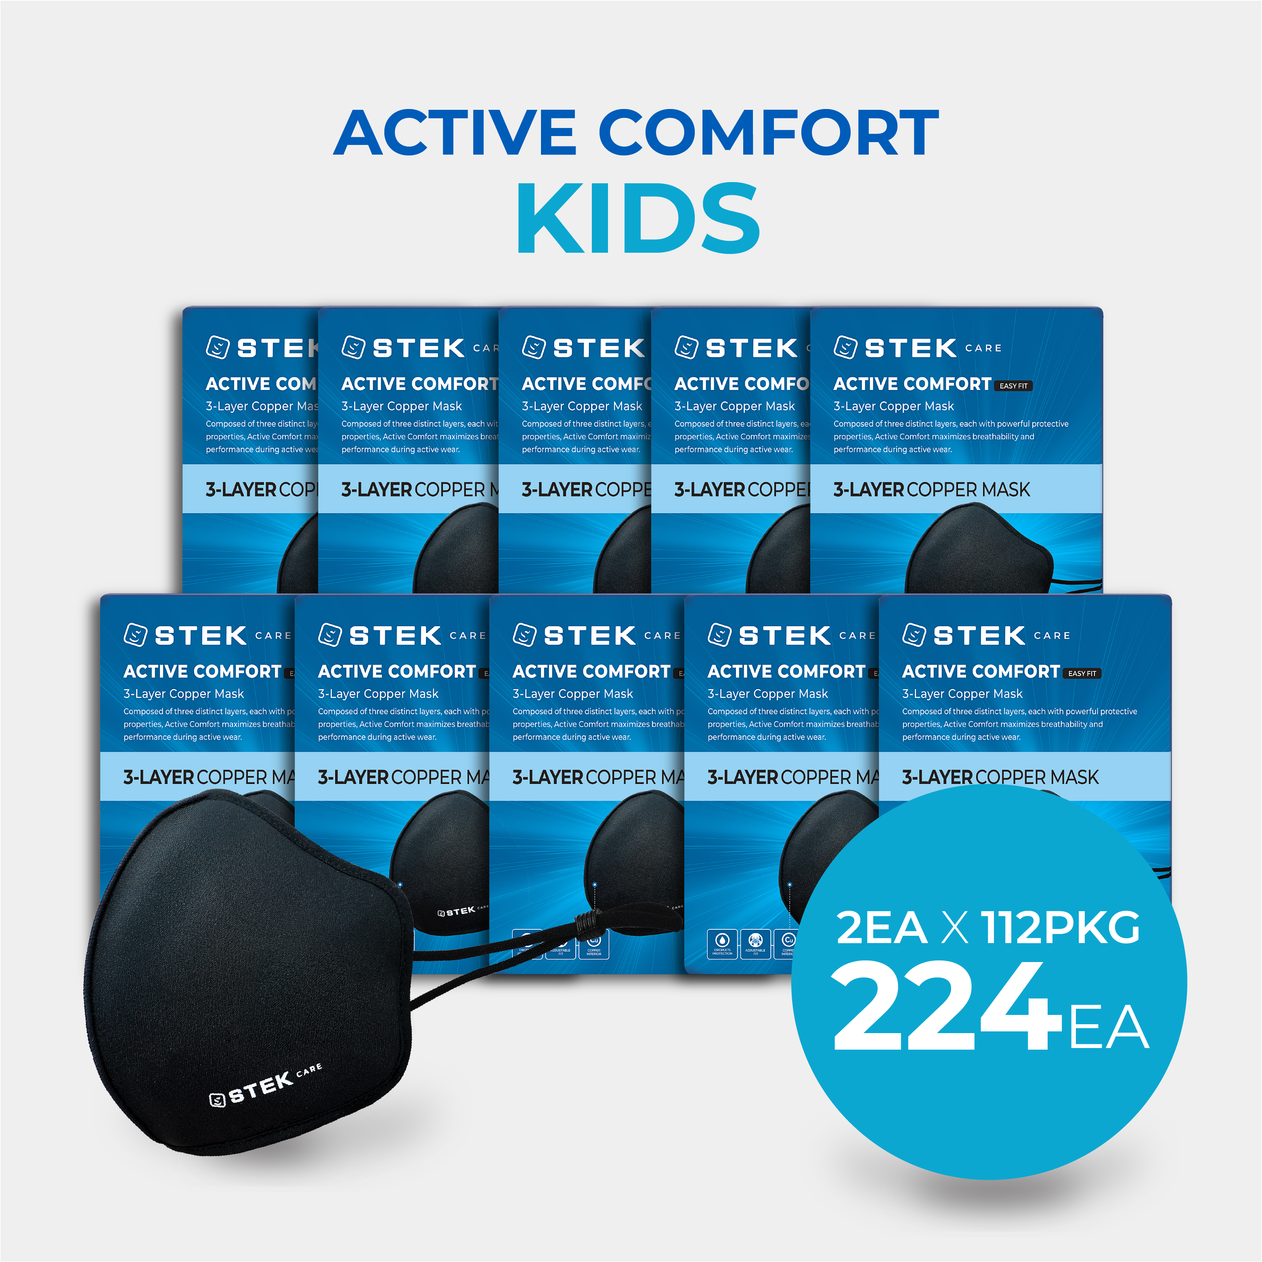 [Free Shipping] Active Comfort Kids Mask 224EA - stekcare